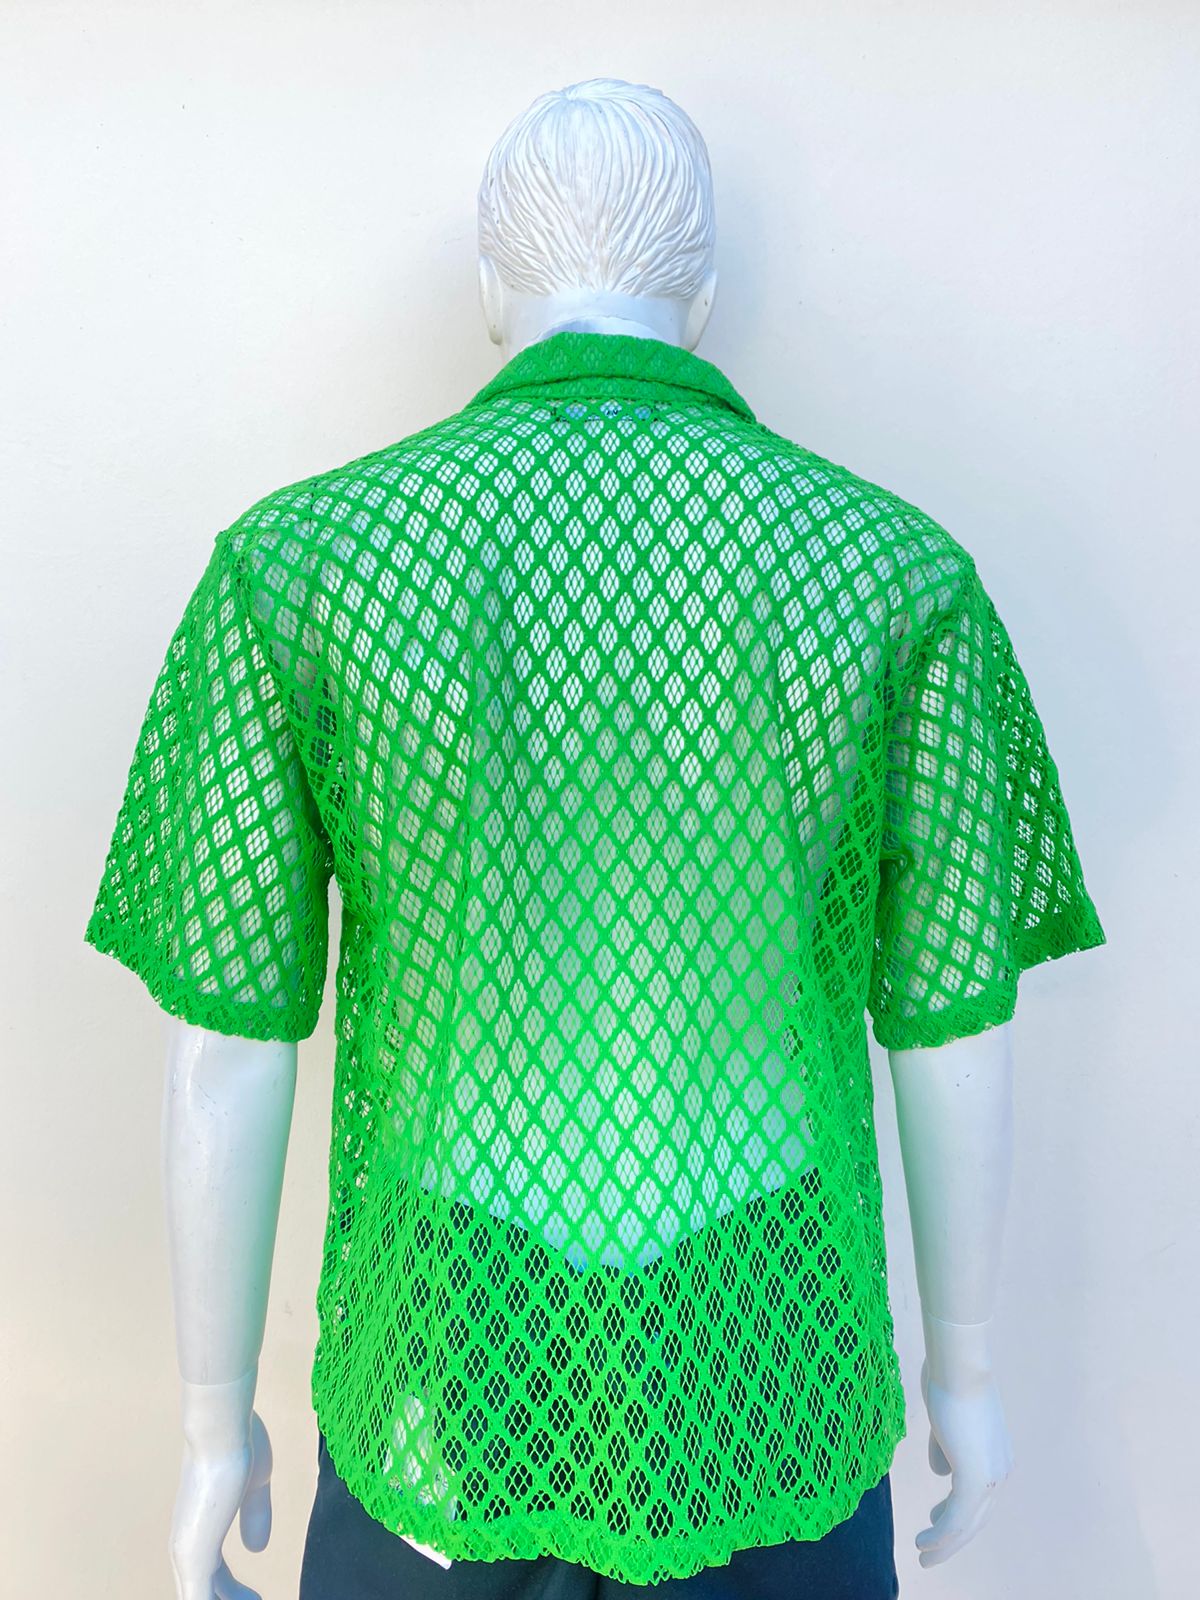 Camisa Fashion Nova original verde en estilo de malla.